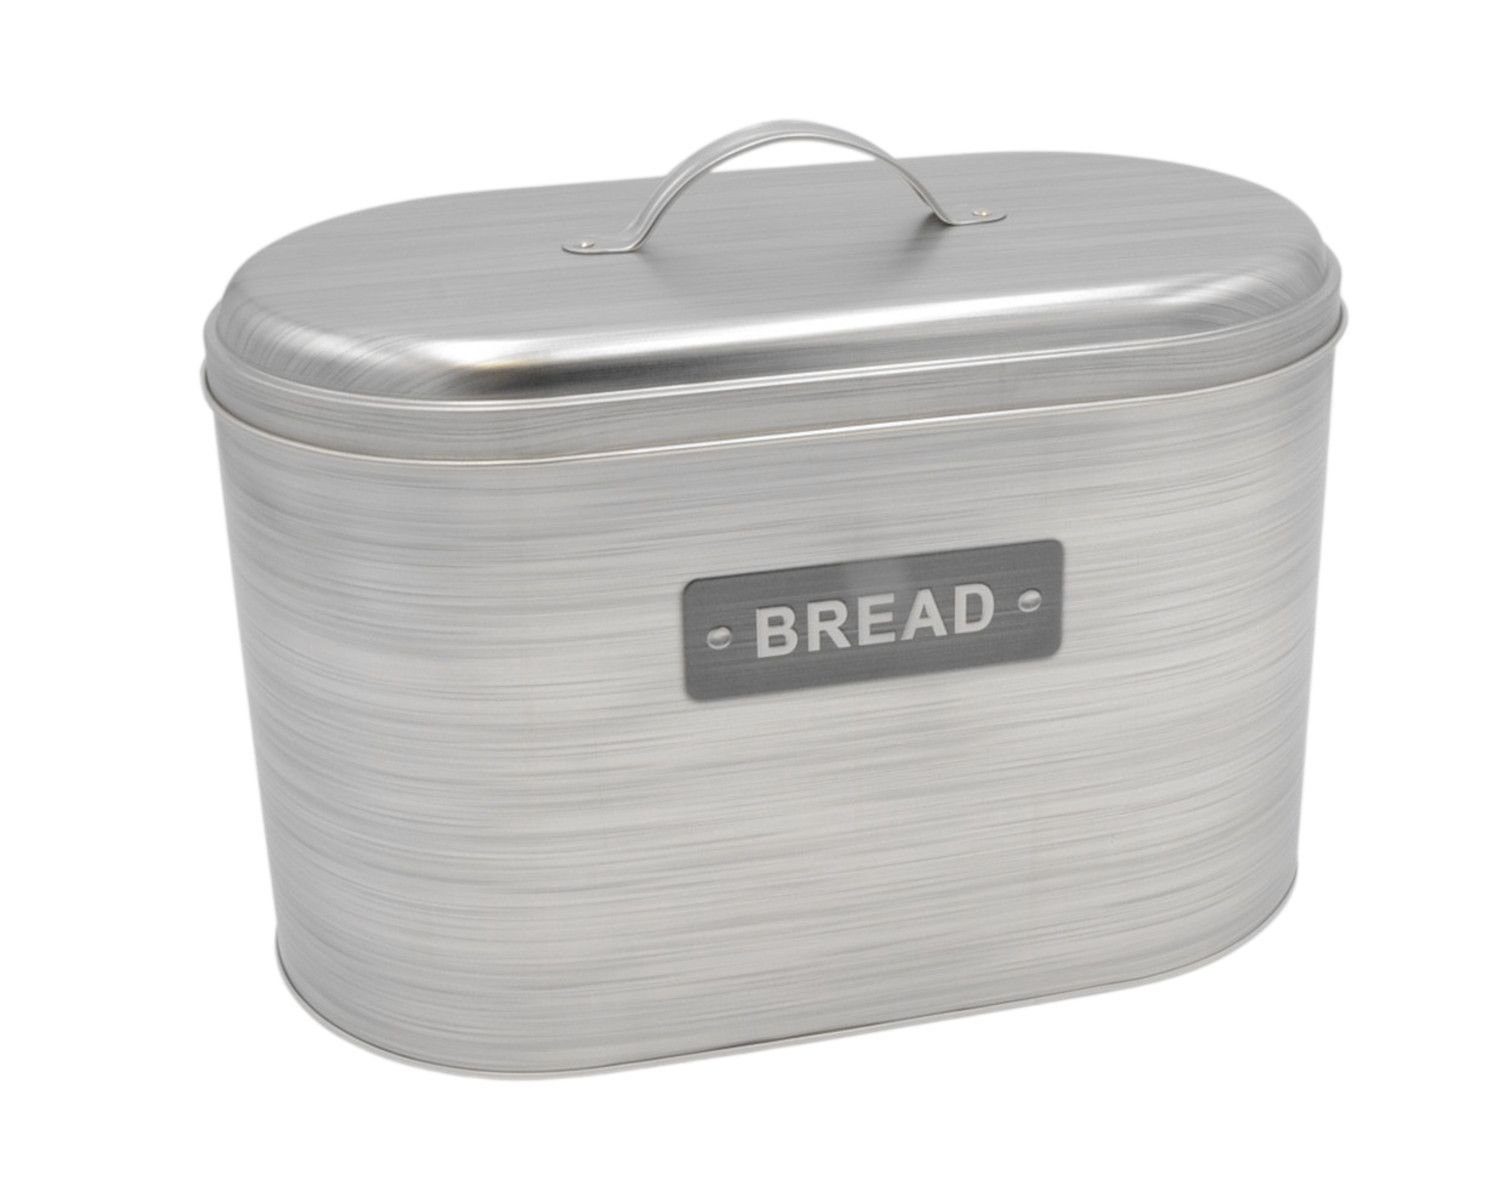 BURI Vorratsdose Metall Brotdose Bread mit Griff Brotkasten Brotbox Brotbehälter, Metall